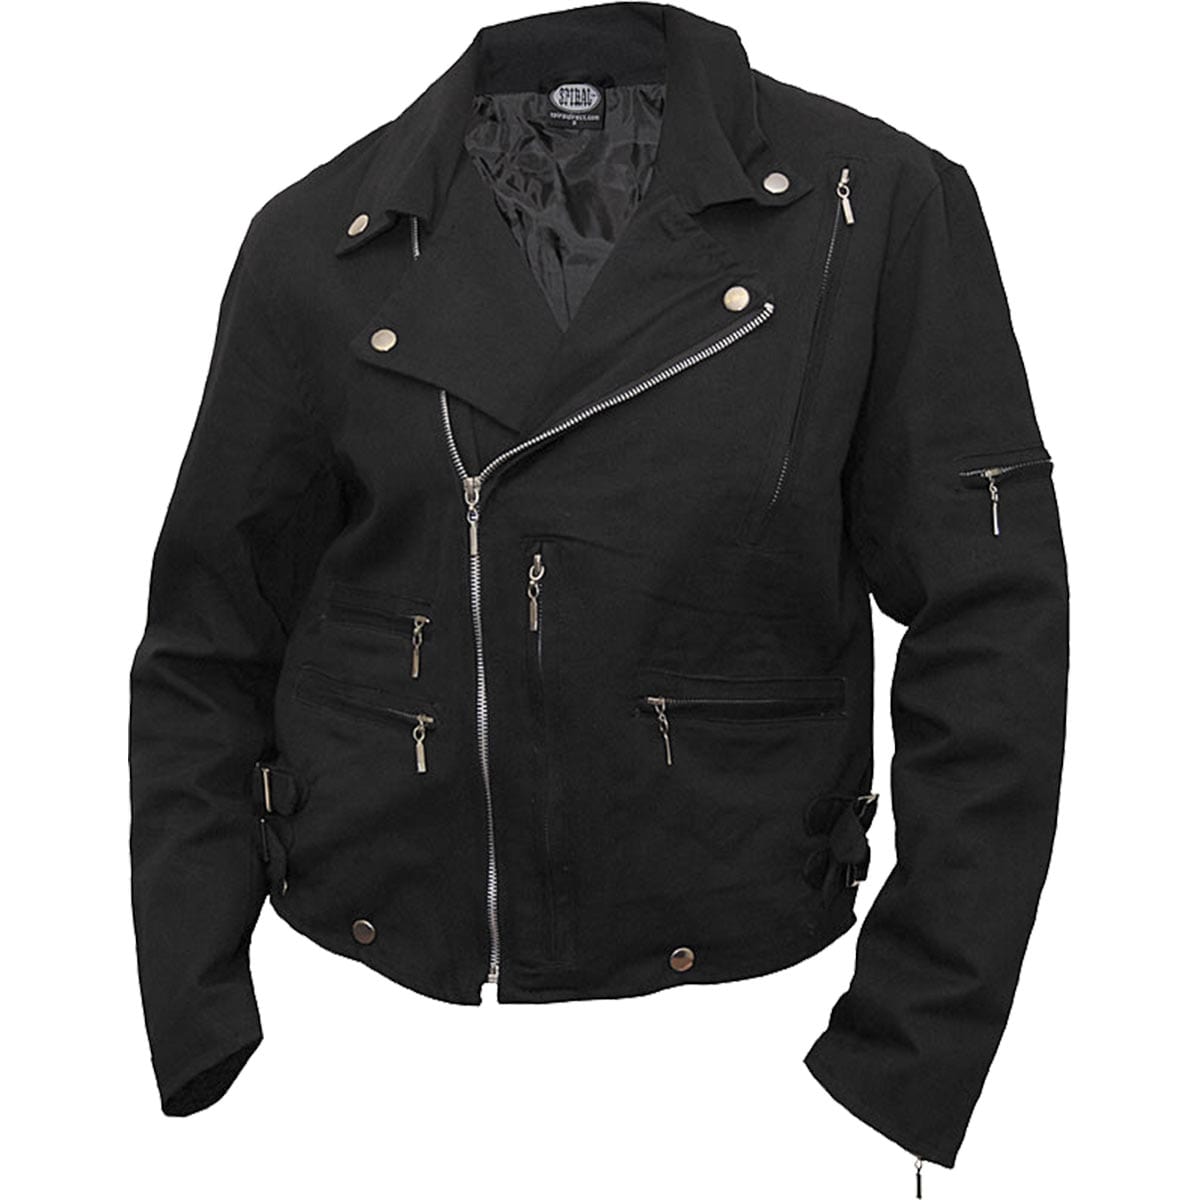 ROCK ETERNAL - Lined Biker Jacket Black - Spiral USA